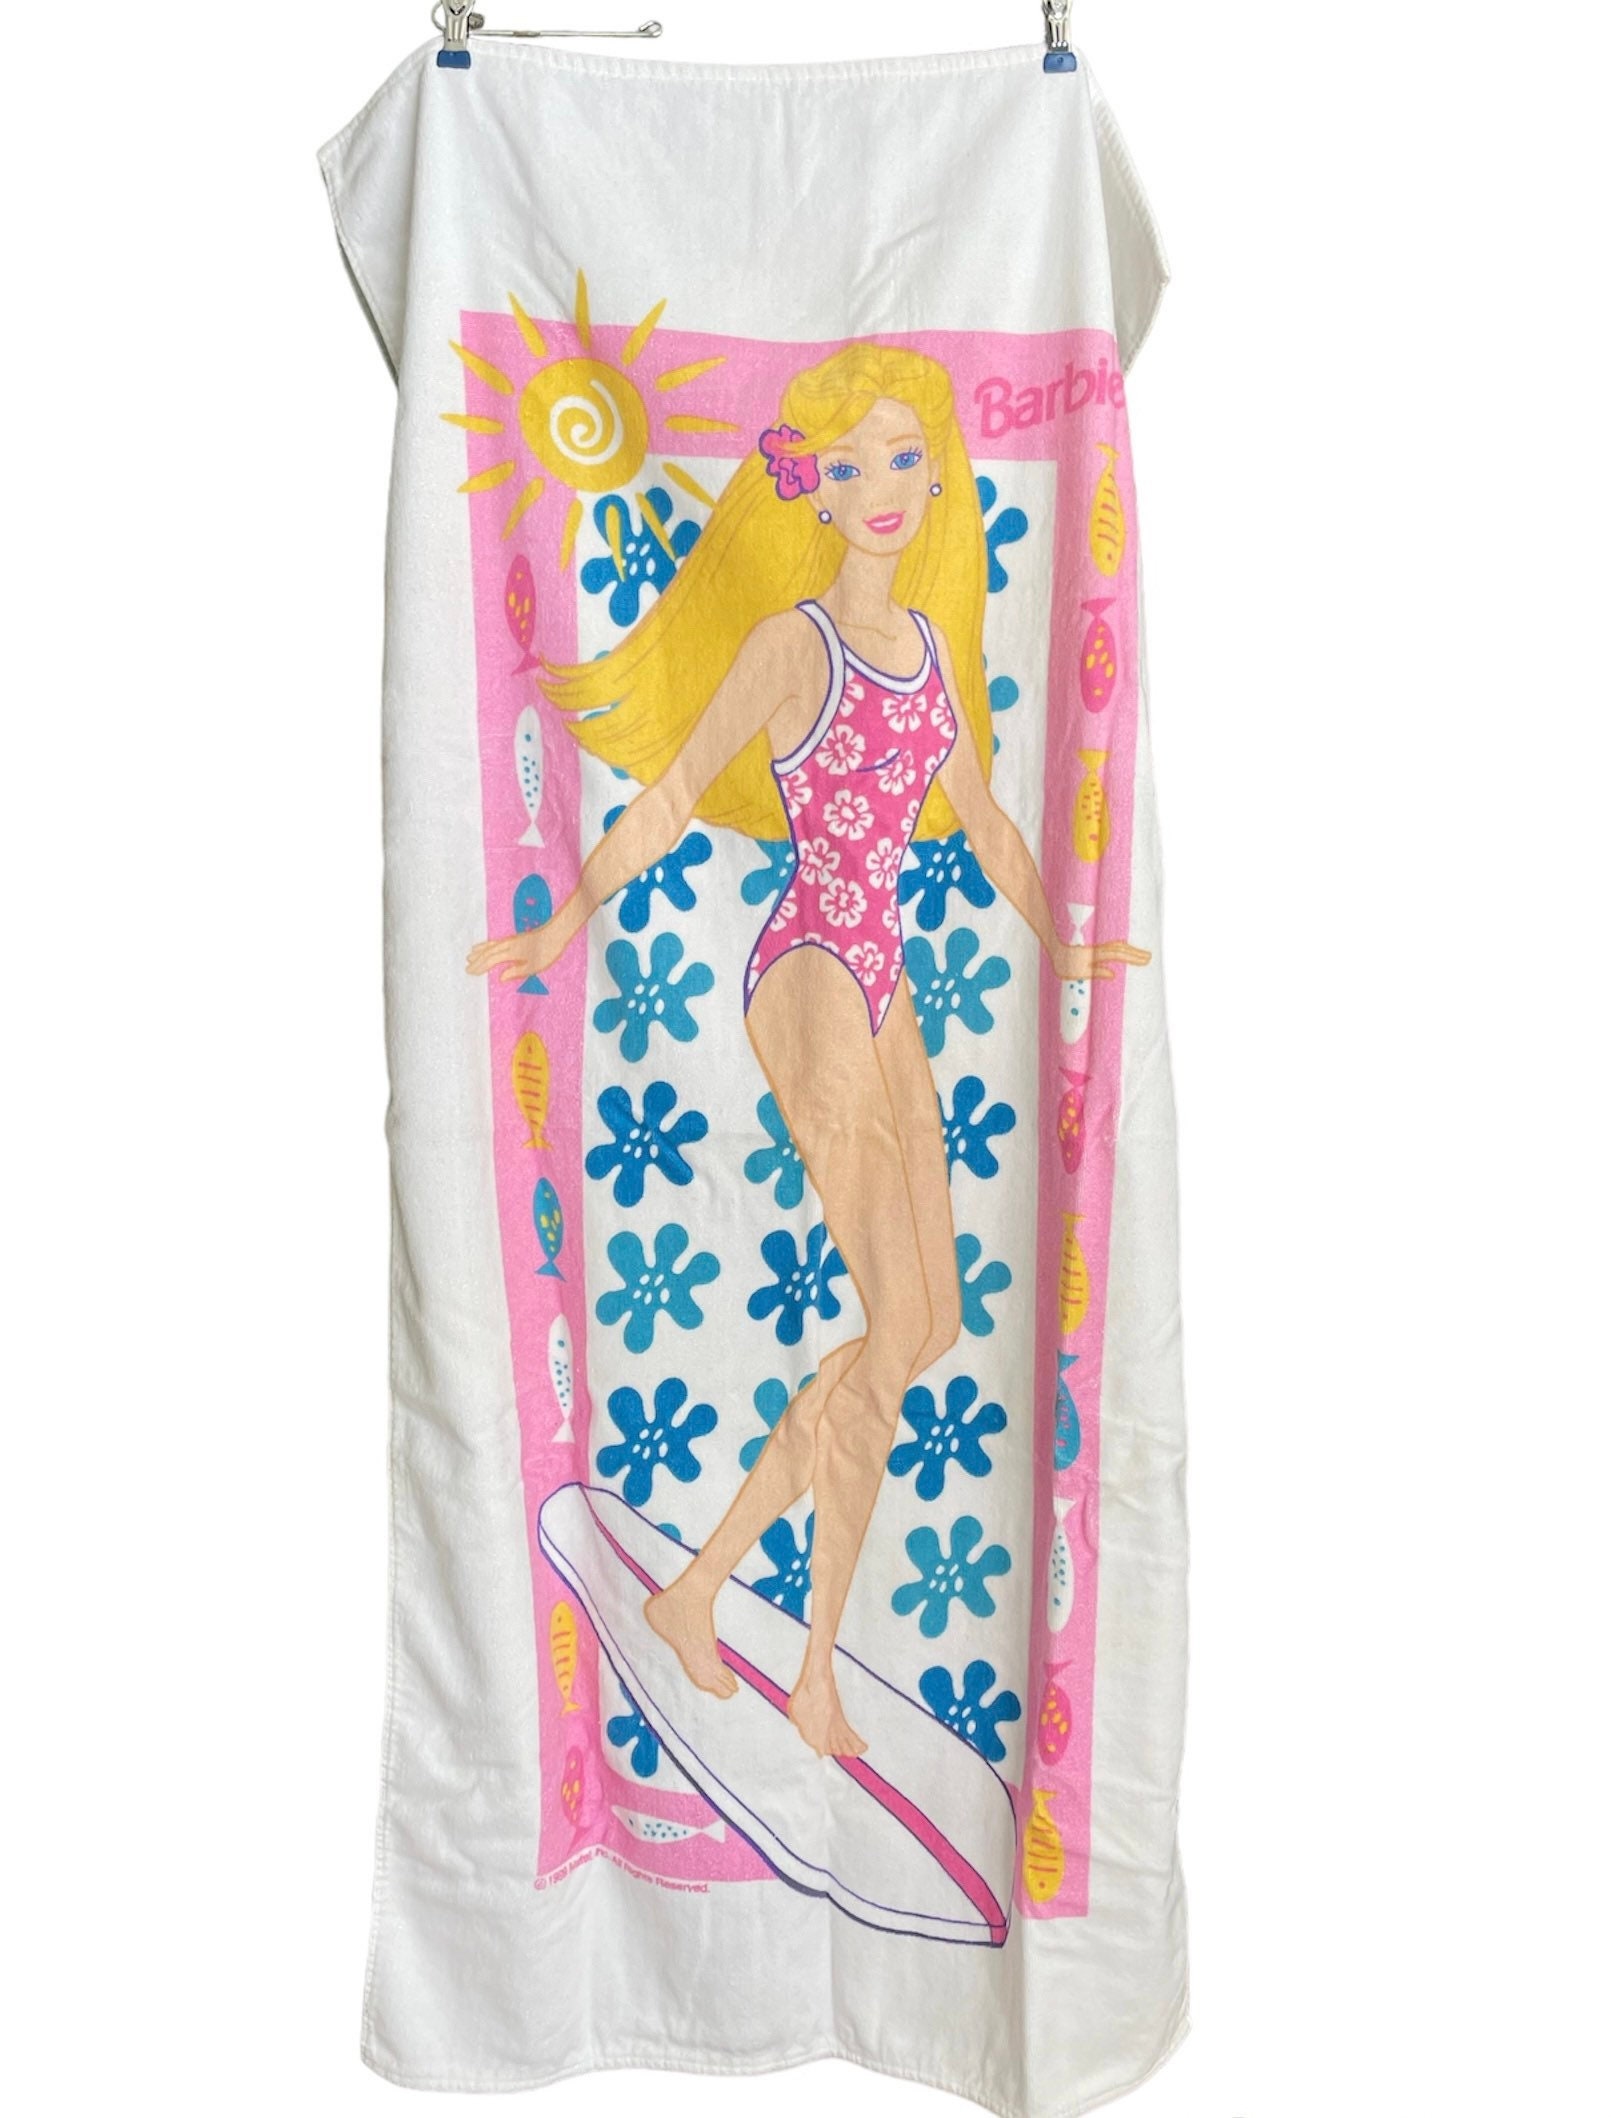 Barbie beach towel -  France